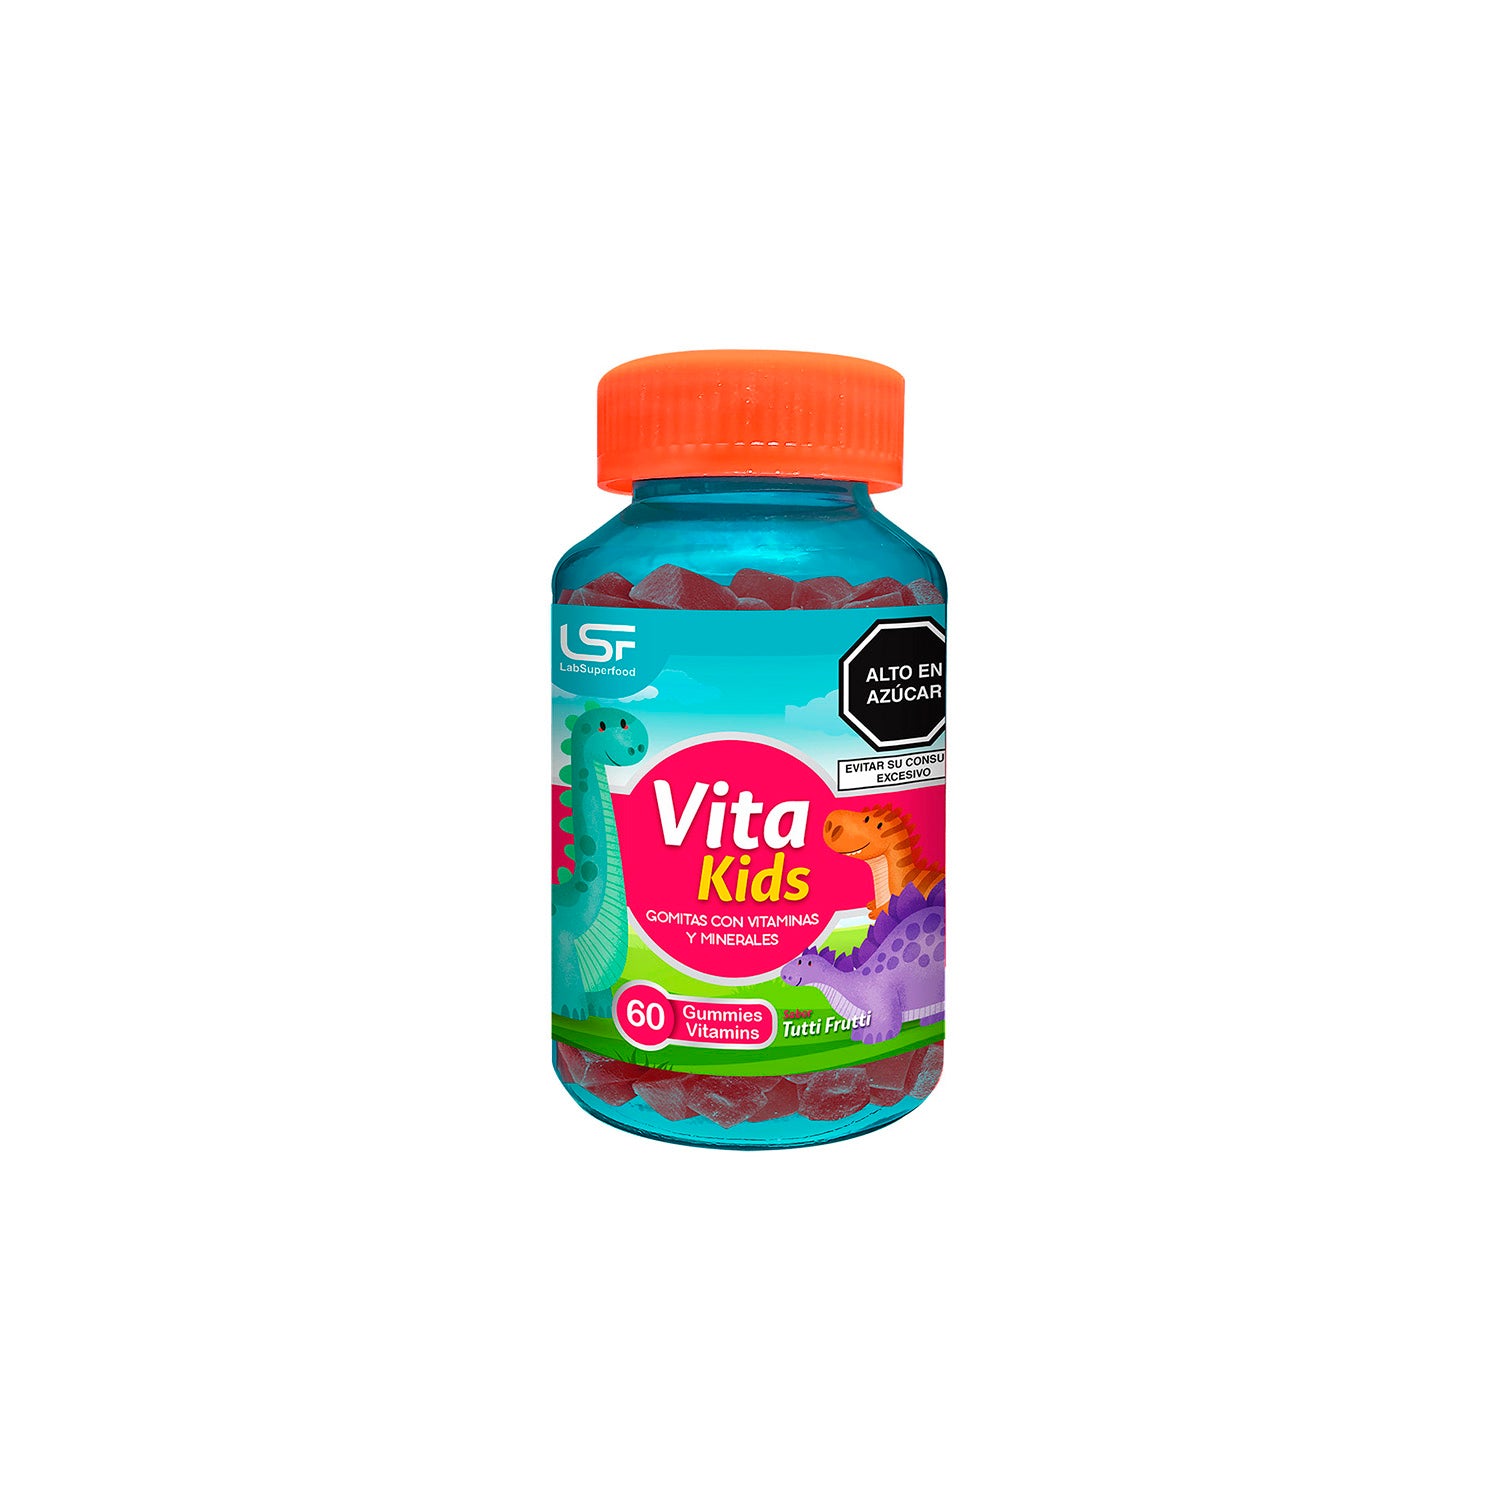 Vita Kids - Sabor Tutti Frutti - 60 gomitas